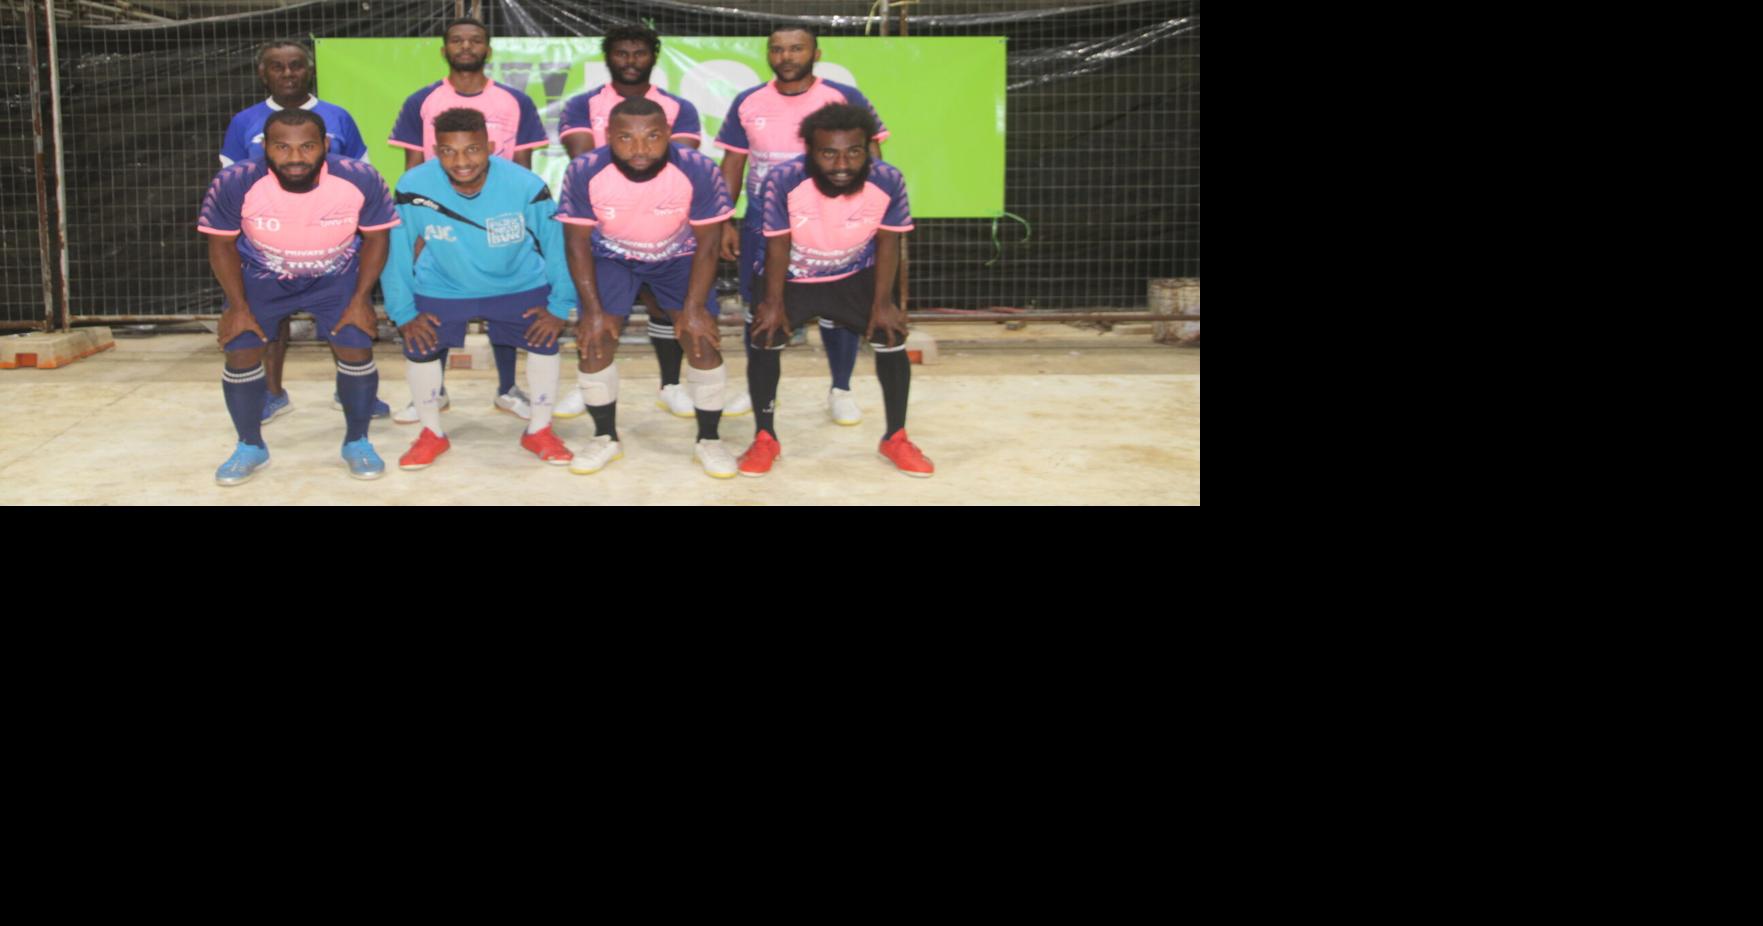 Racing Club Abidjan added a new photo. - Racing Club Abidjan